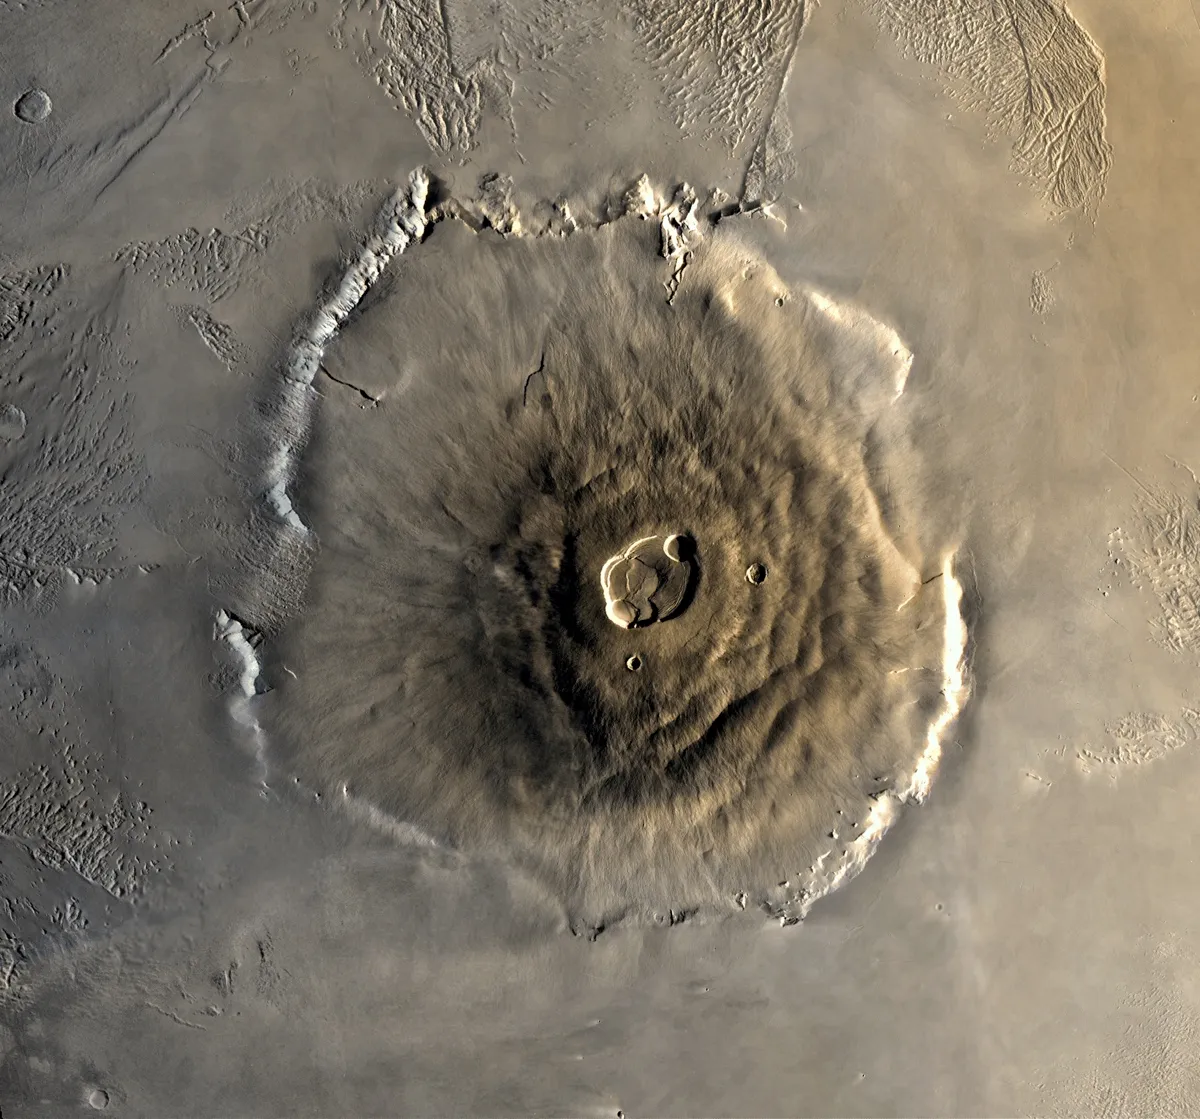 The Olympus Mons volcano on Mars